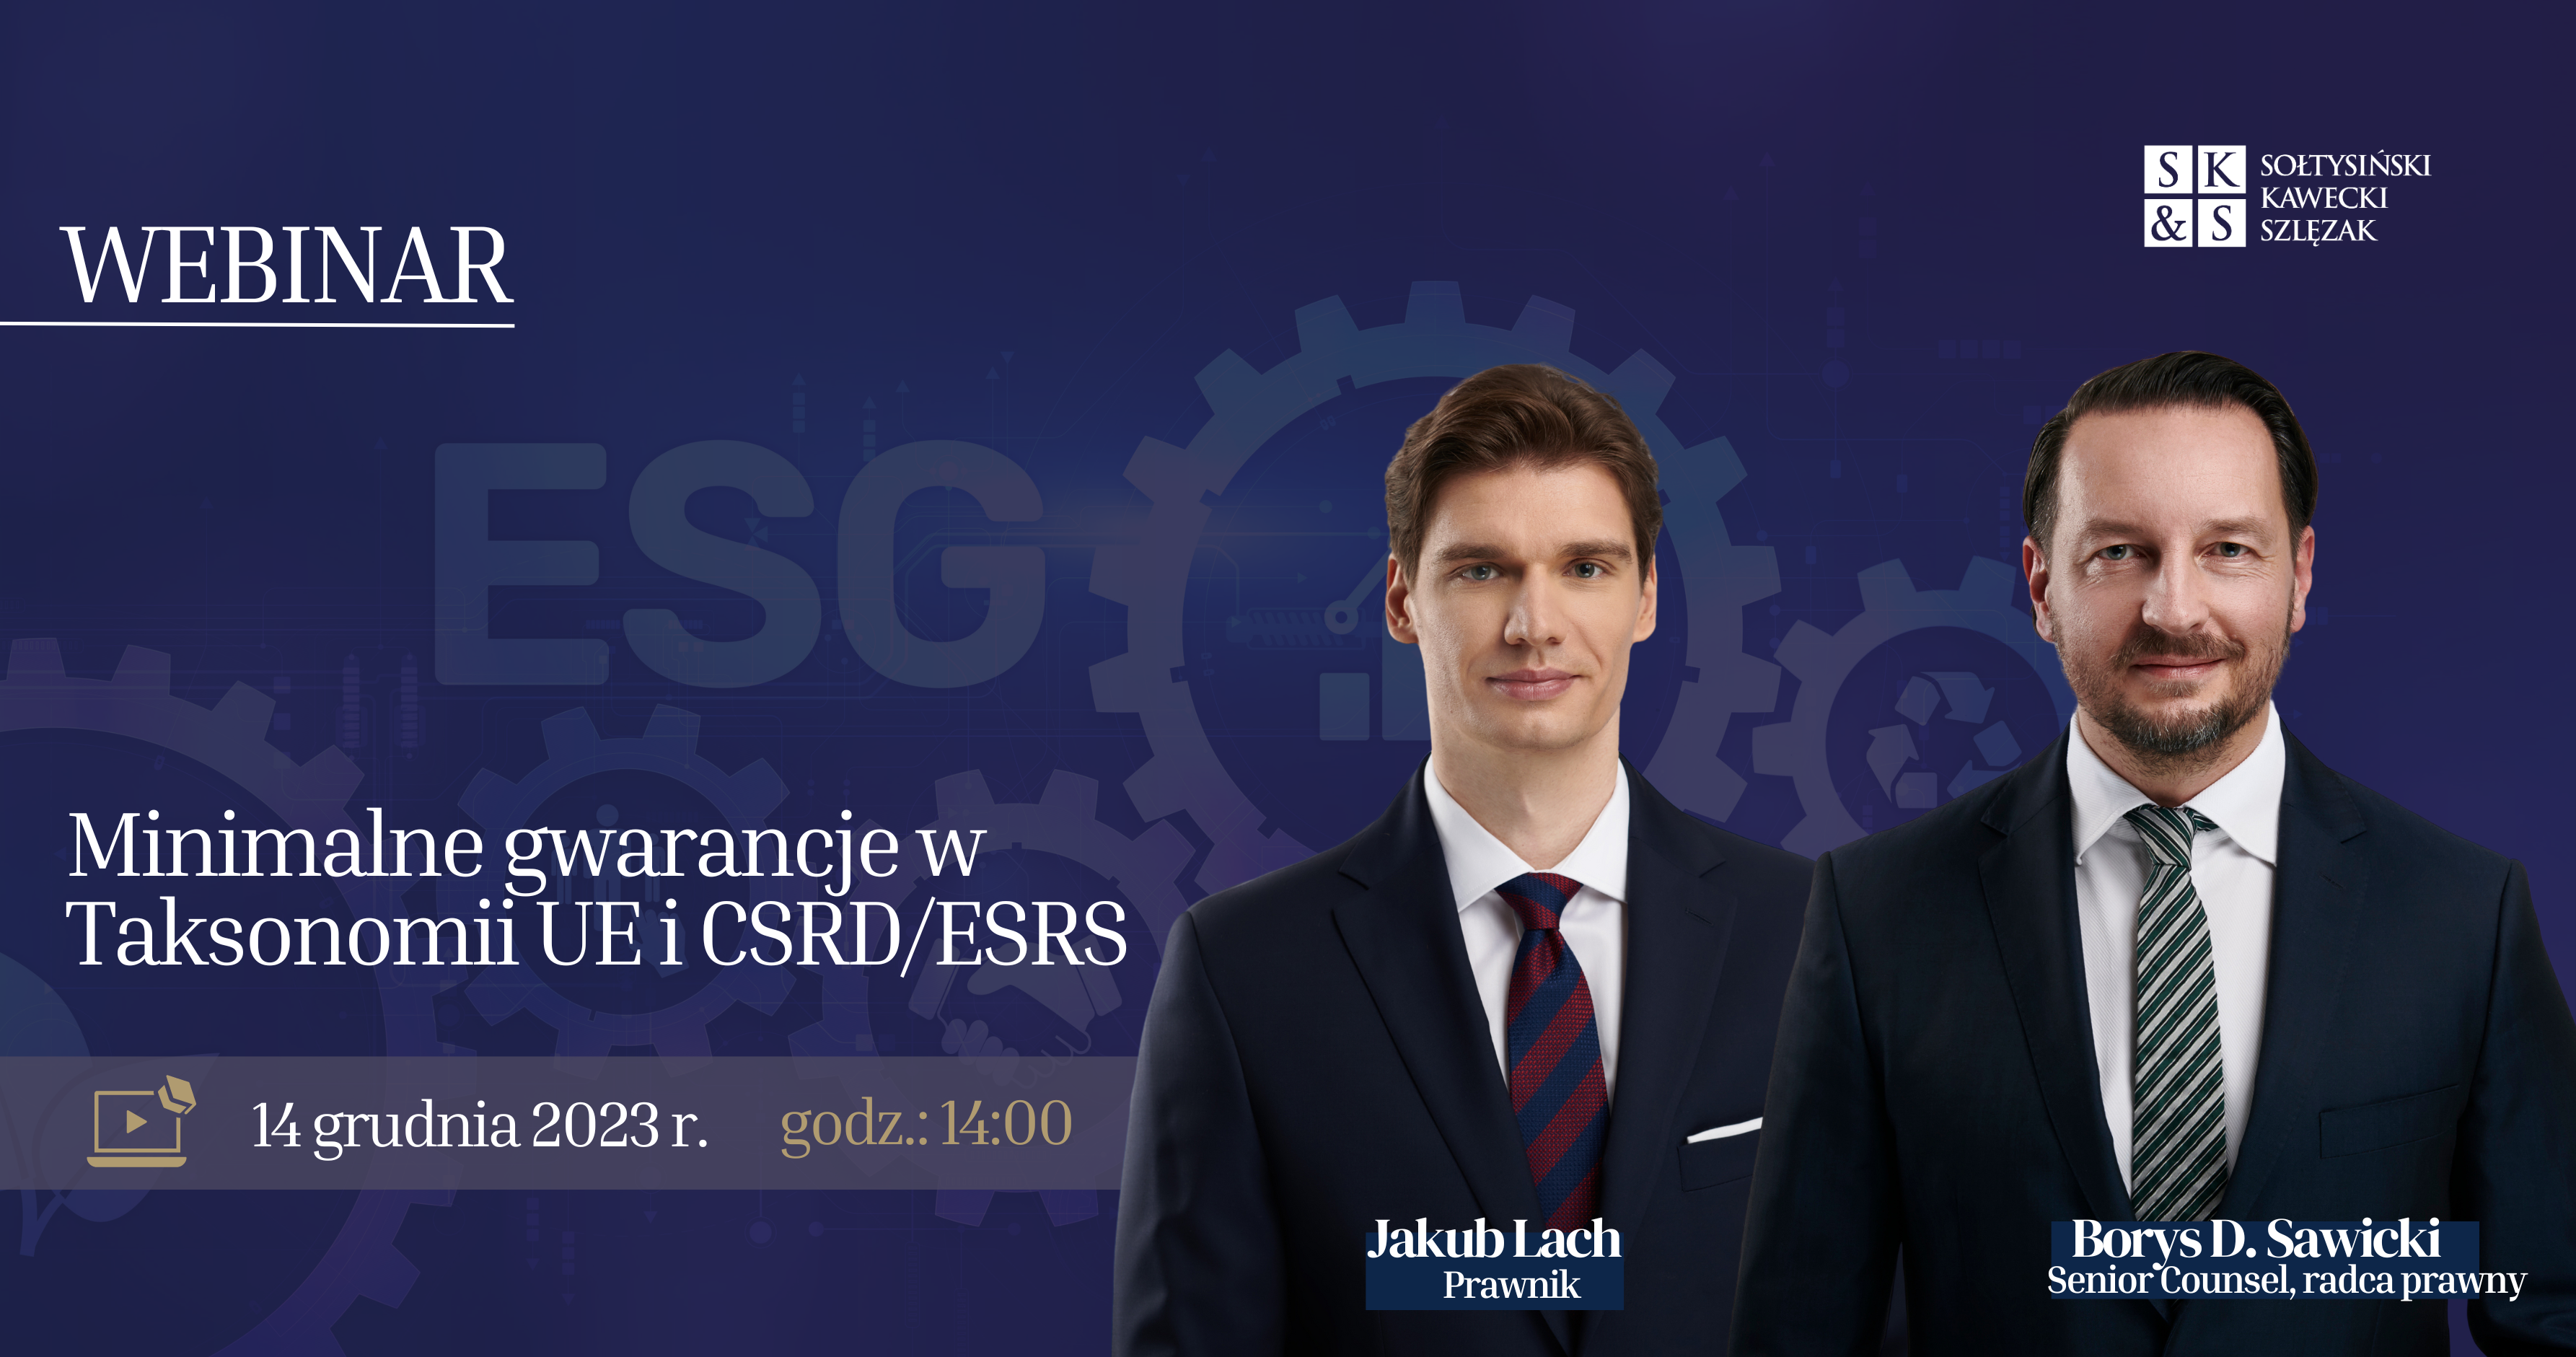 Join the next webinar on ESG challenges by Sołtysiński Kawecki & Szlęzak!